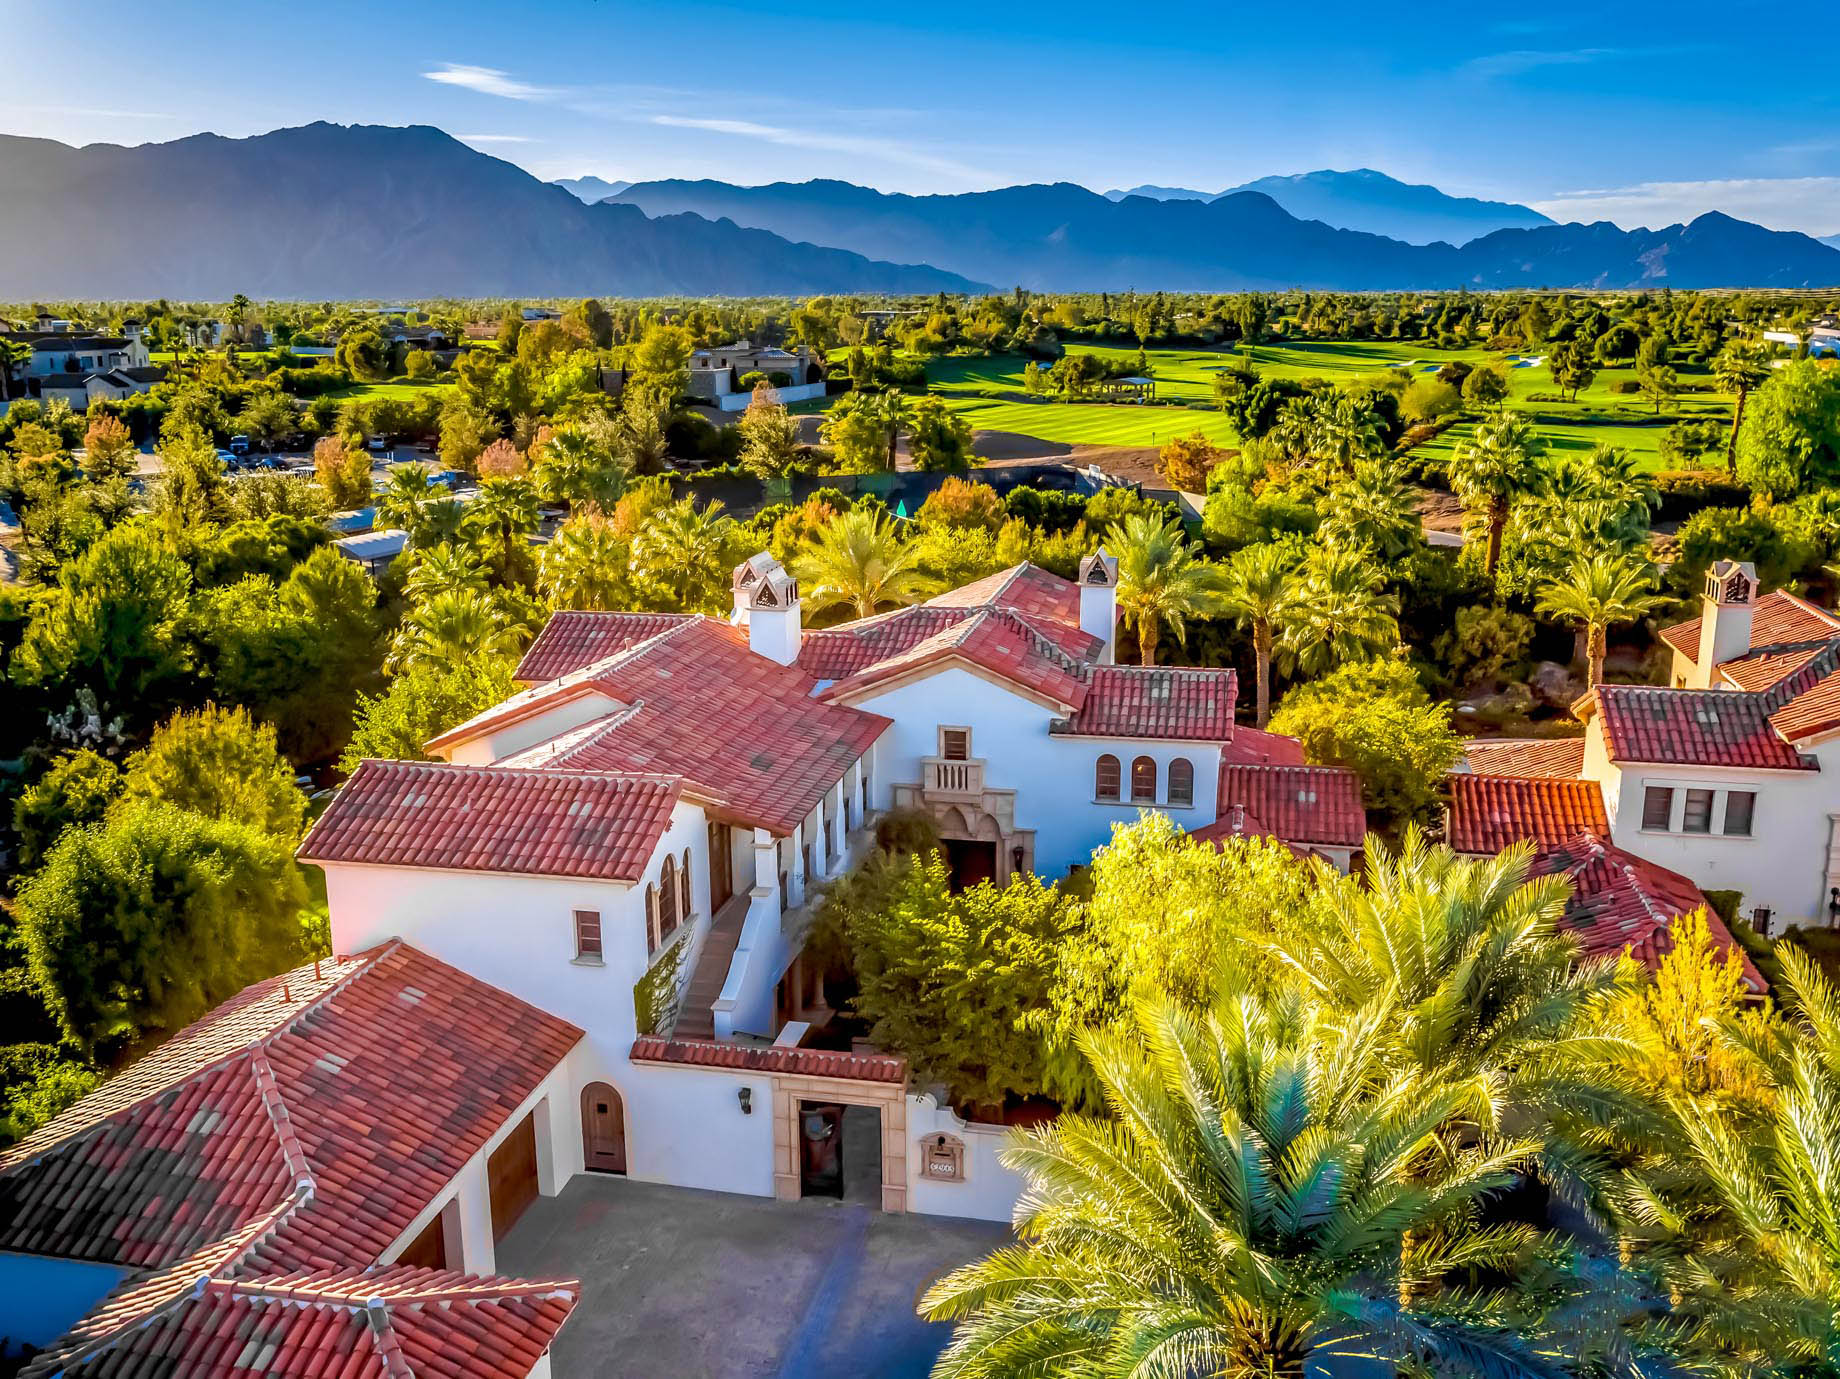 Sylvester Stallone Residence – Humboldt Blvd, La Quinta, CA, USA